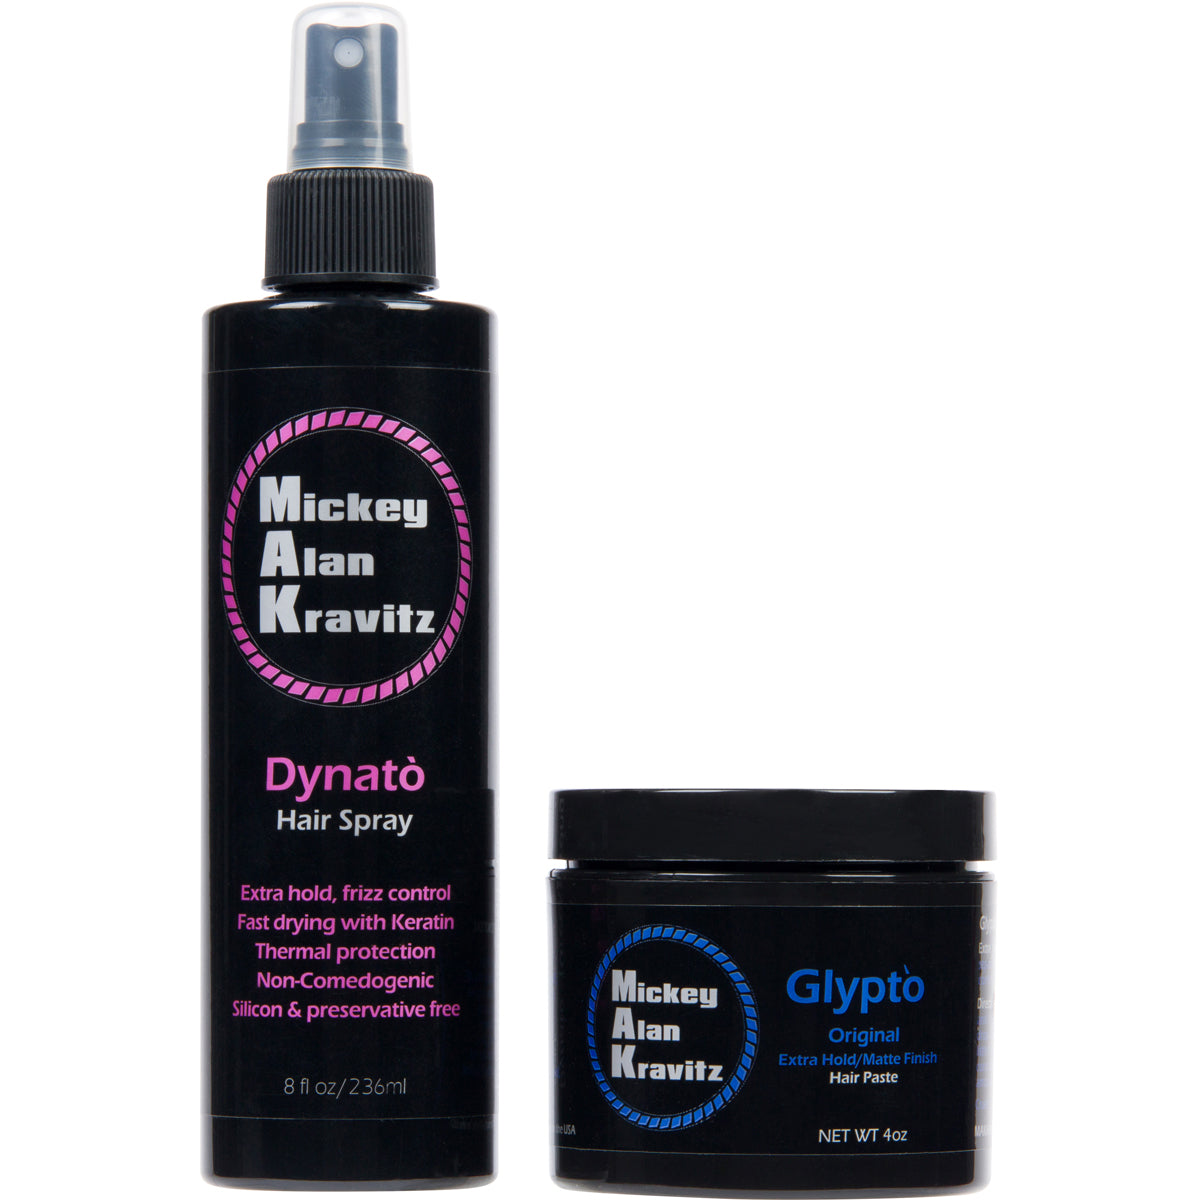 Aanvulling Blaze titel Glypto Original hair paste & Dynato hair spray pack – Mickey Alan Kravitz